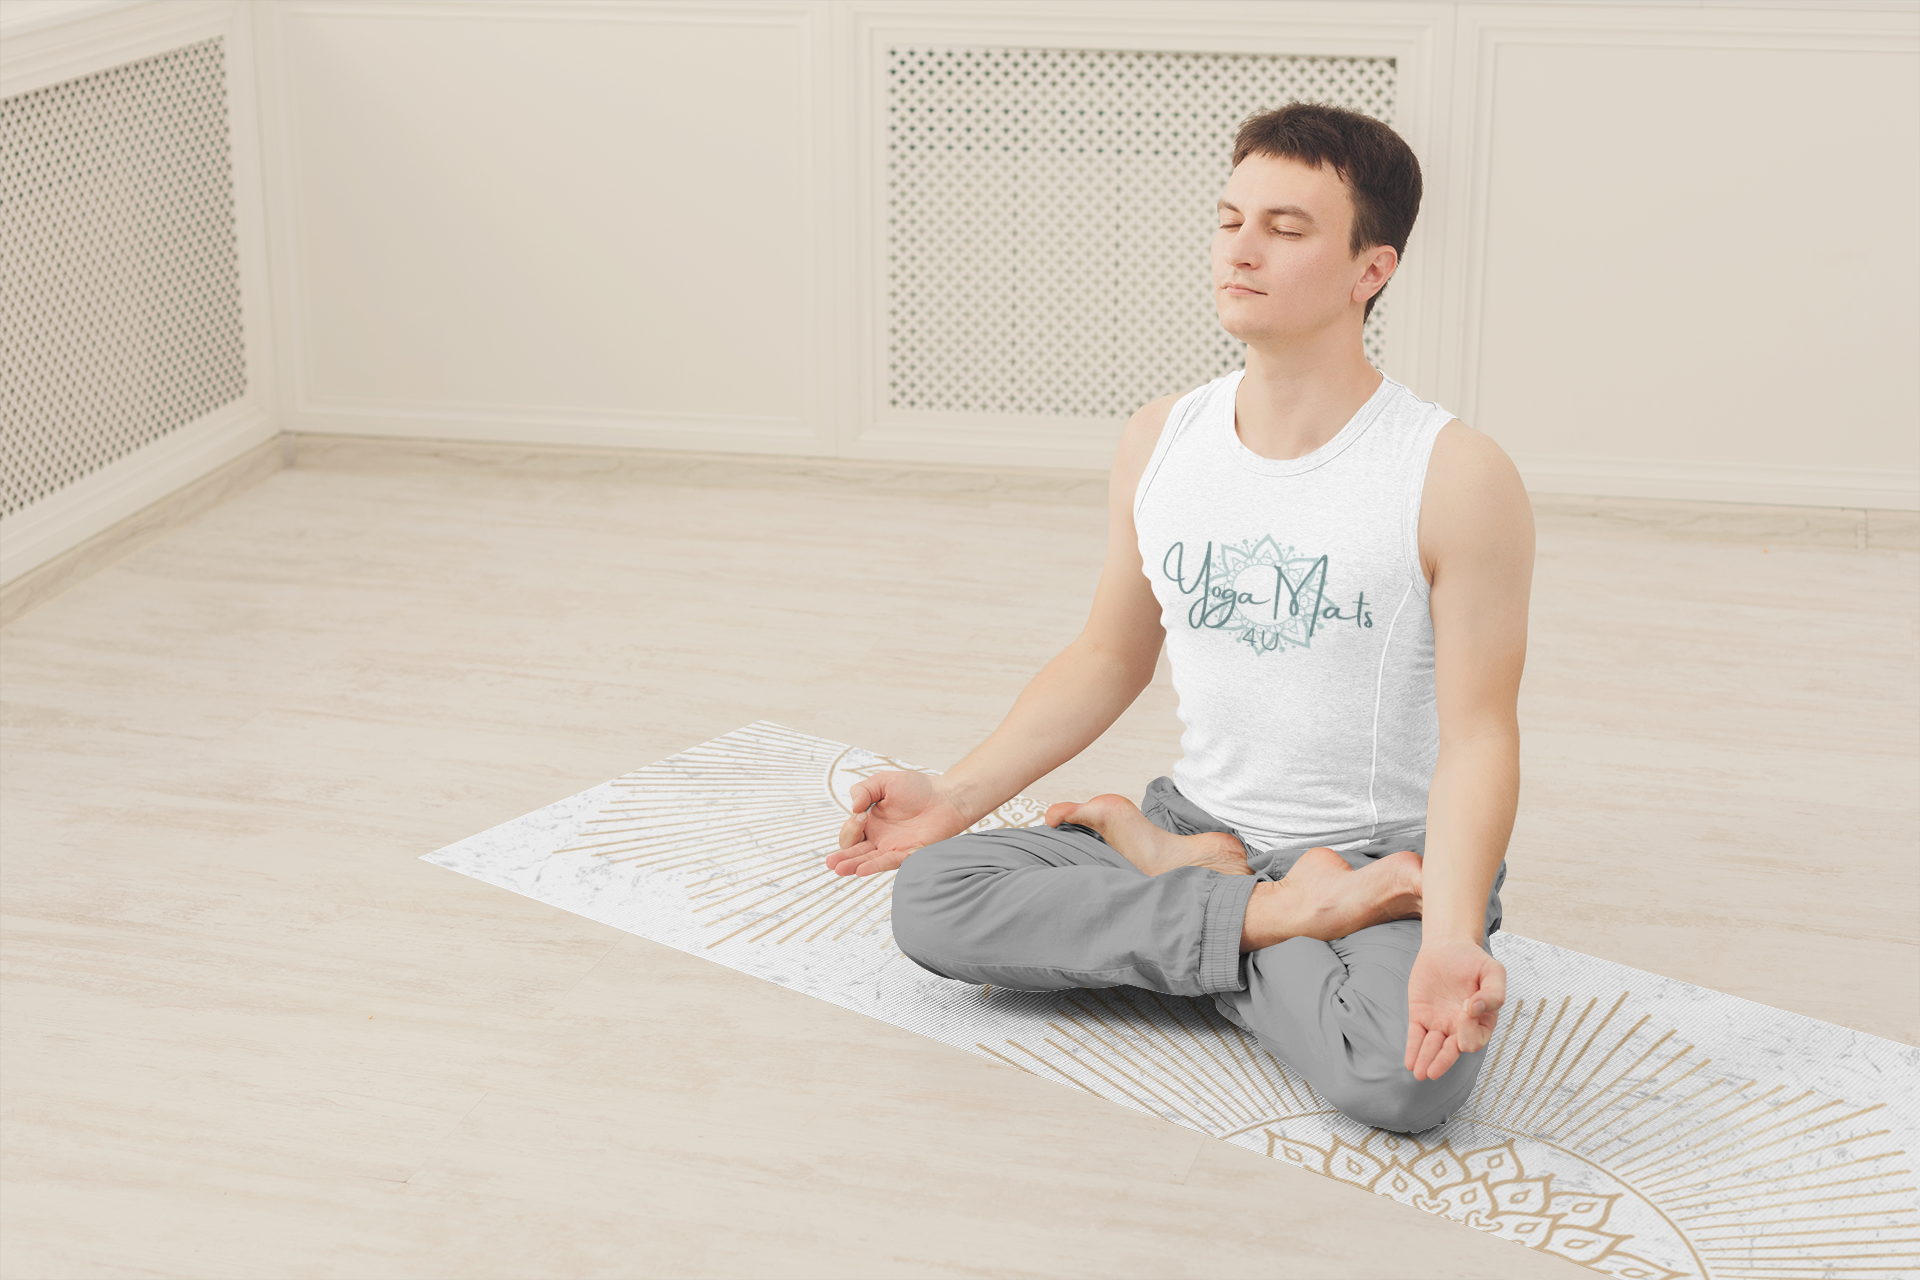 Boho Marble Mandala Yoga Mat – Yoga Mats 4 U